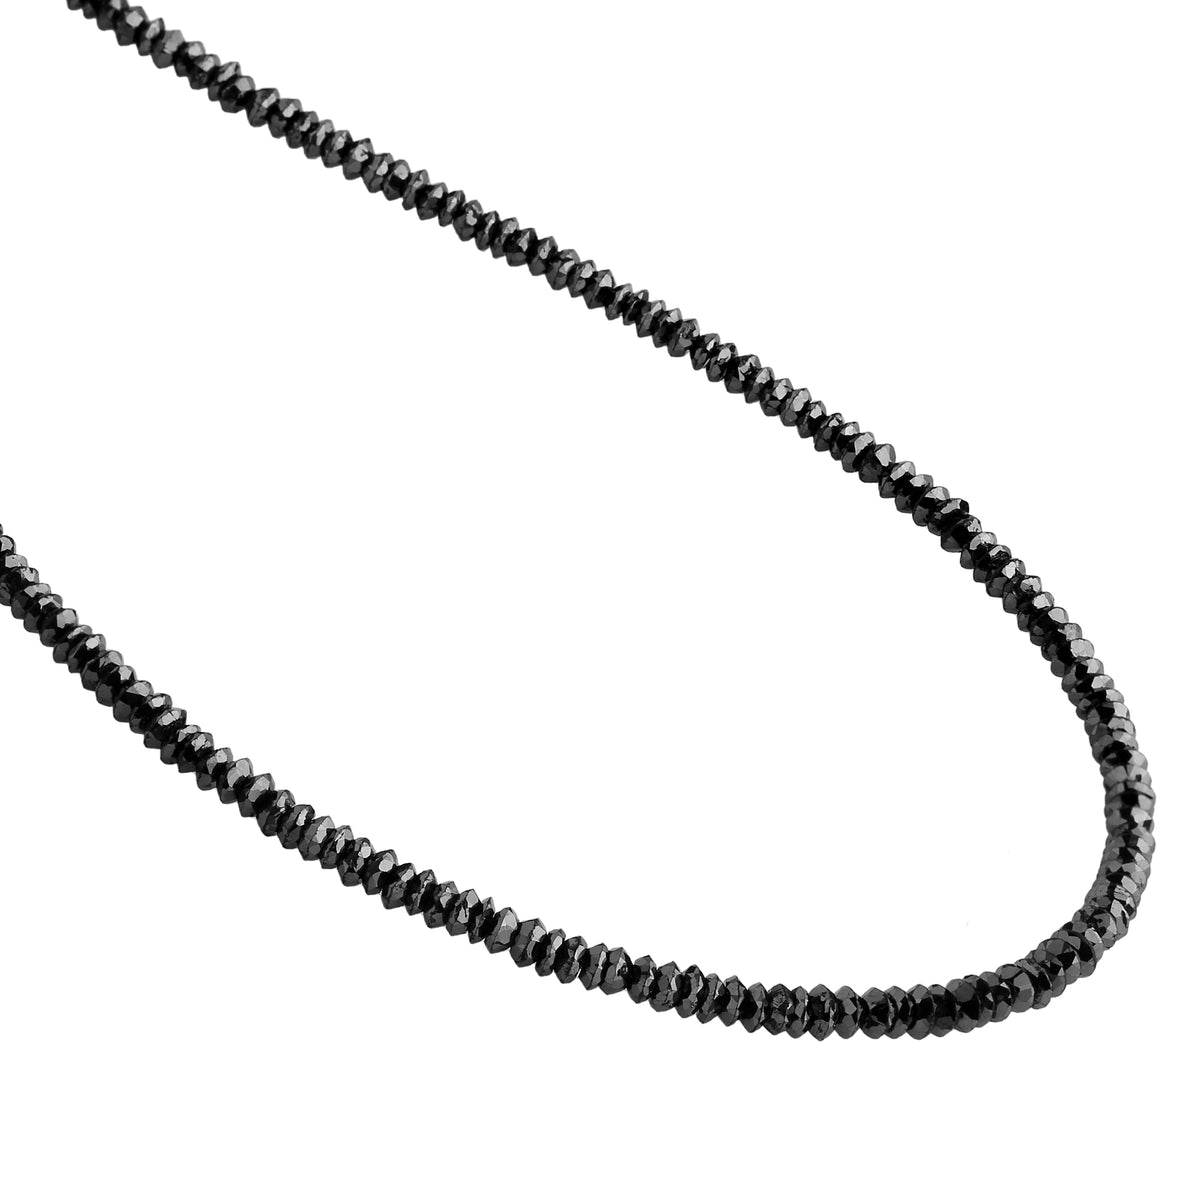 black diamond necklace - timeless elegance and luxury